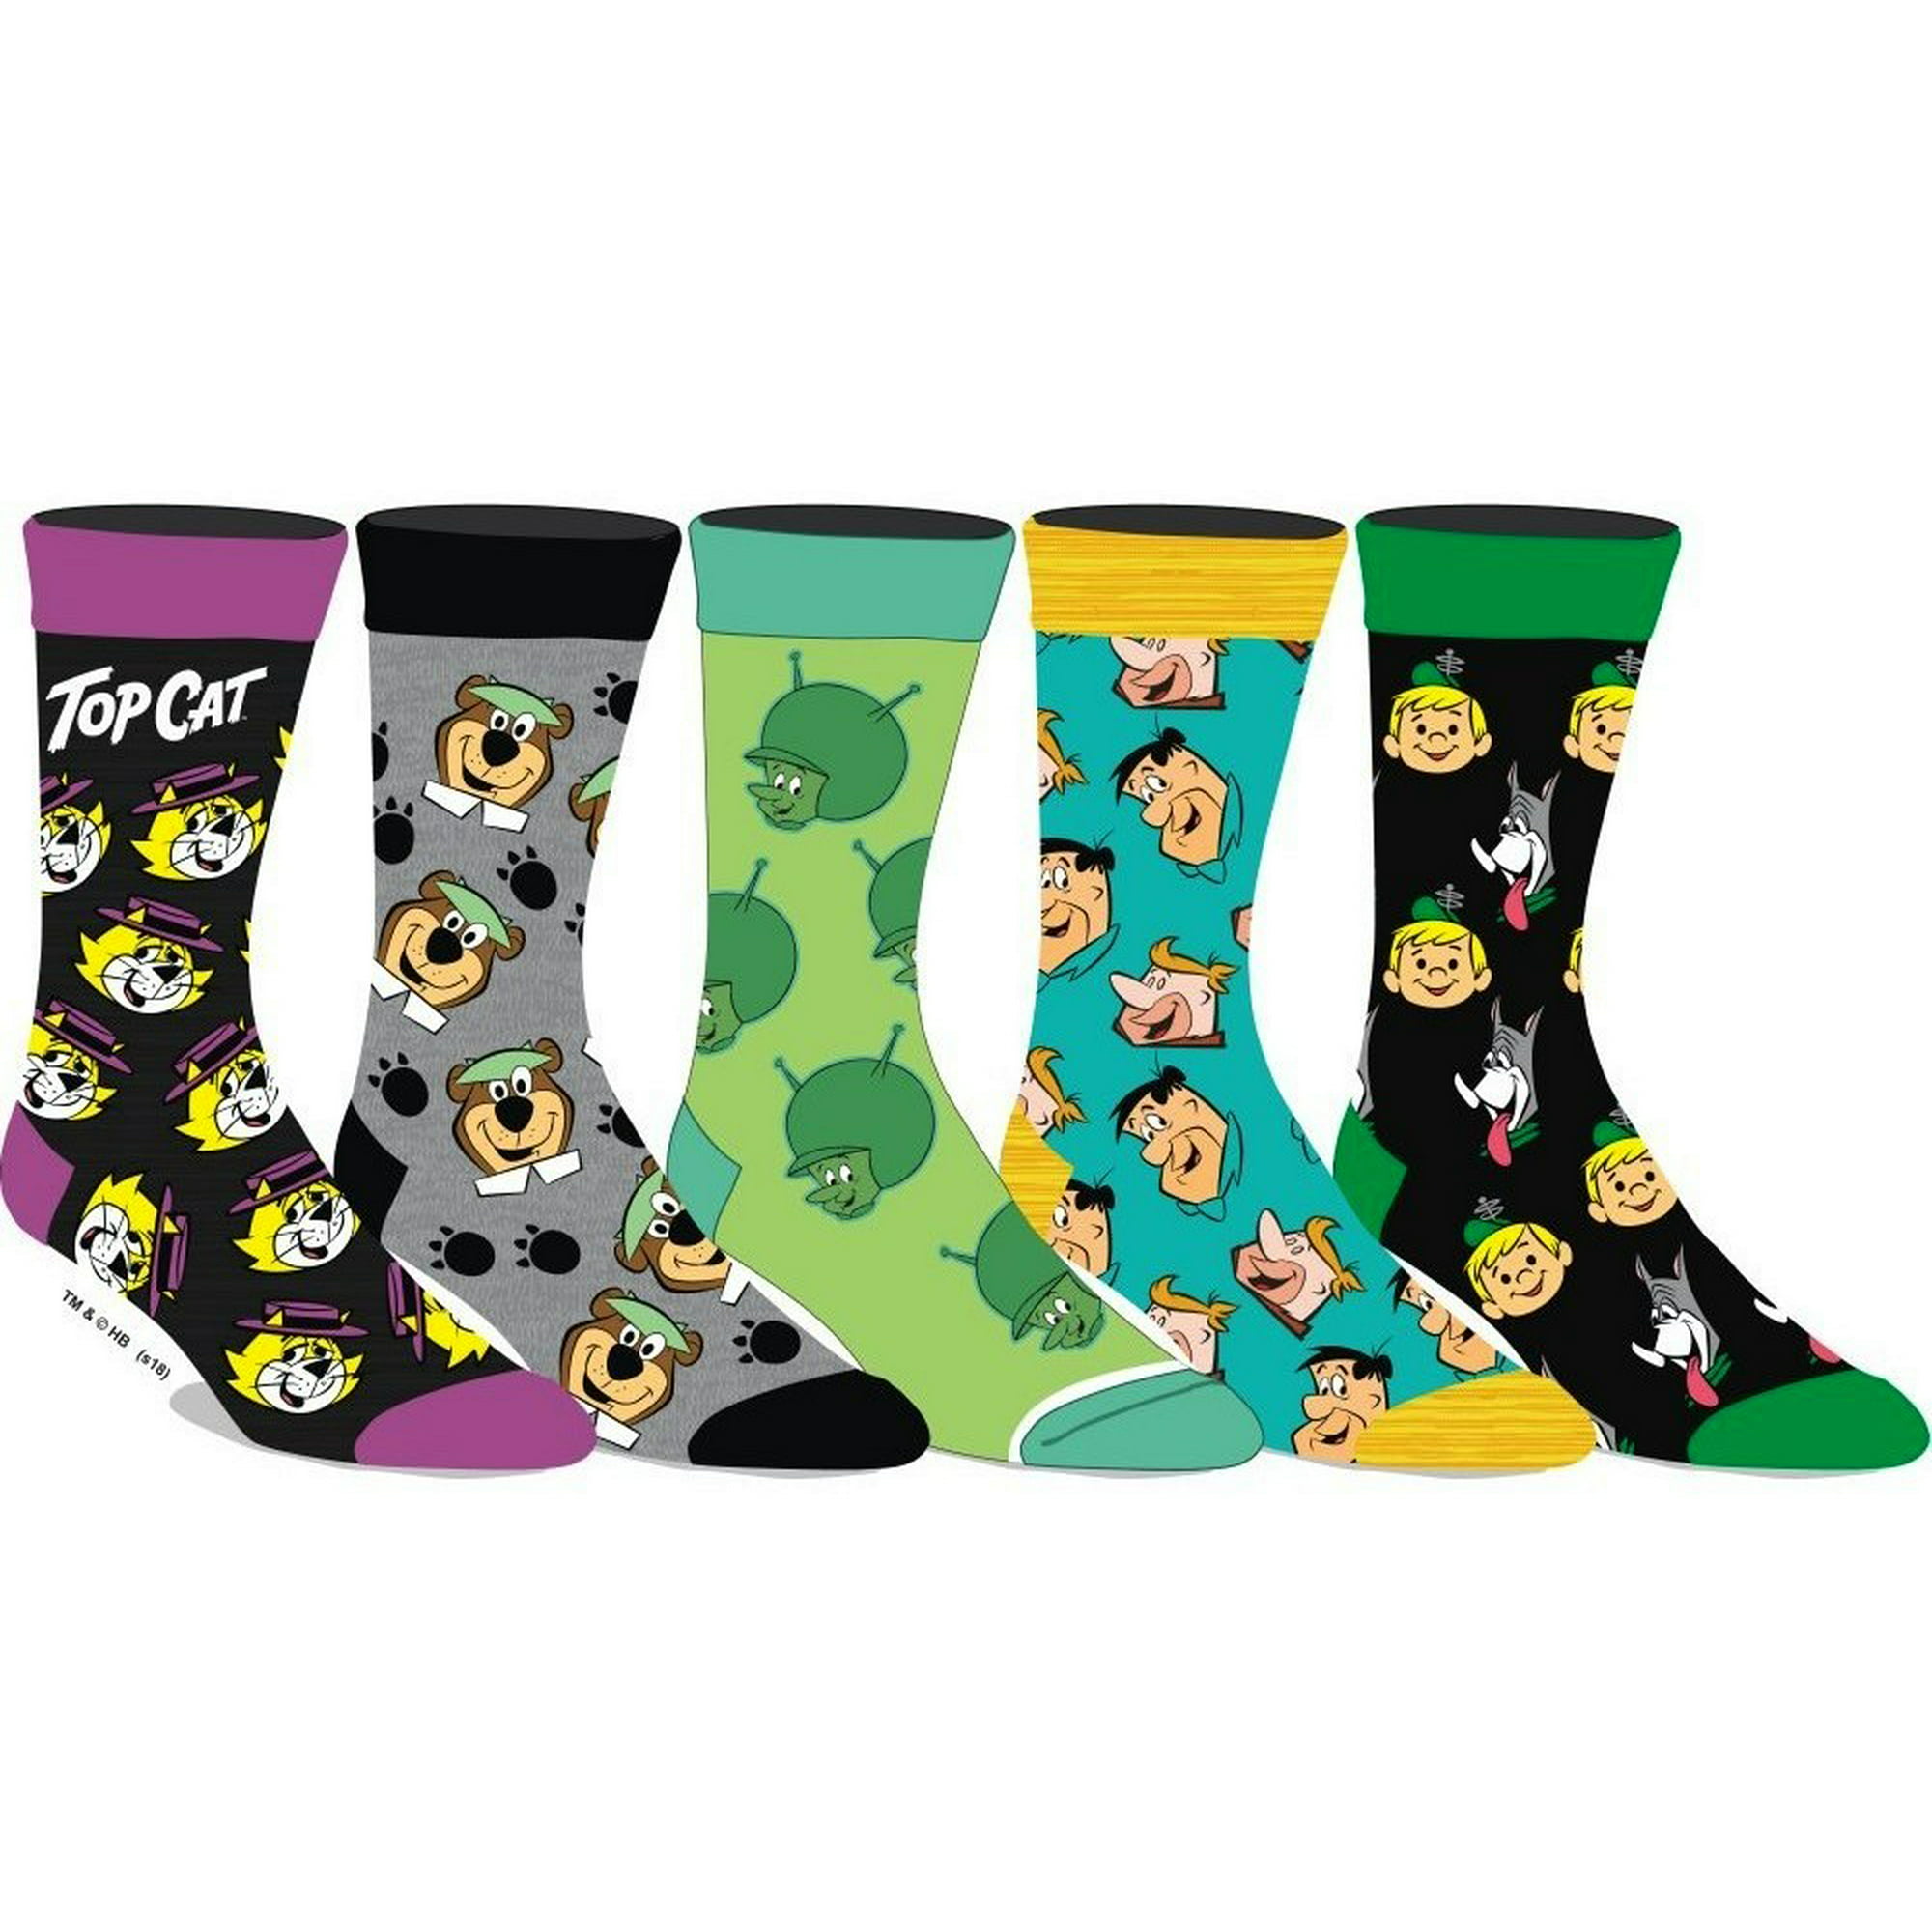 Hanna Barbera Crew Socks Gift Set Adult